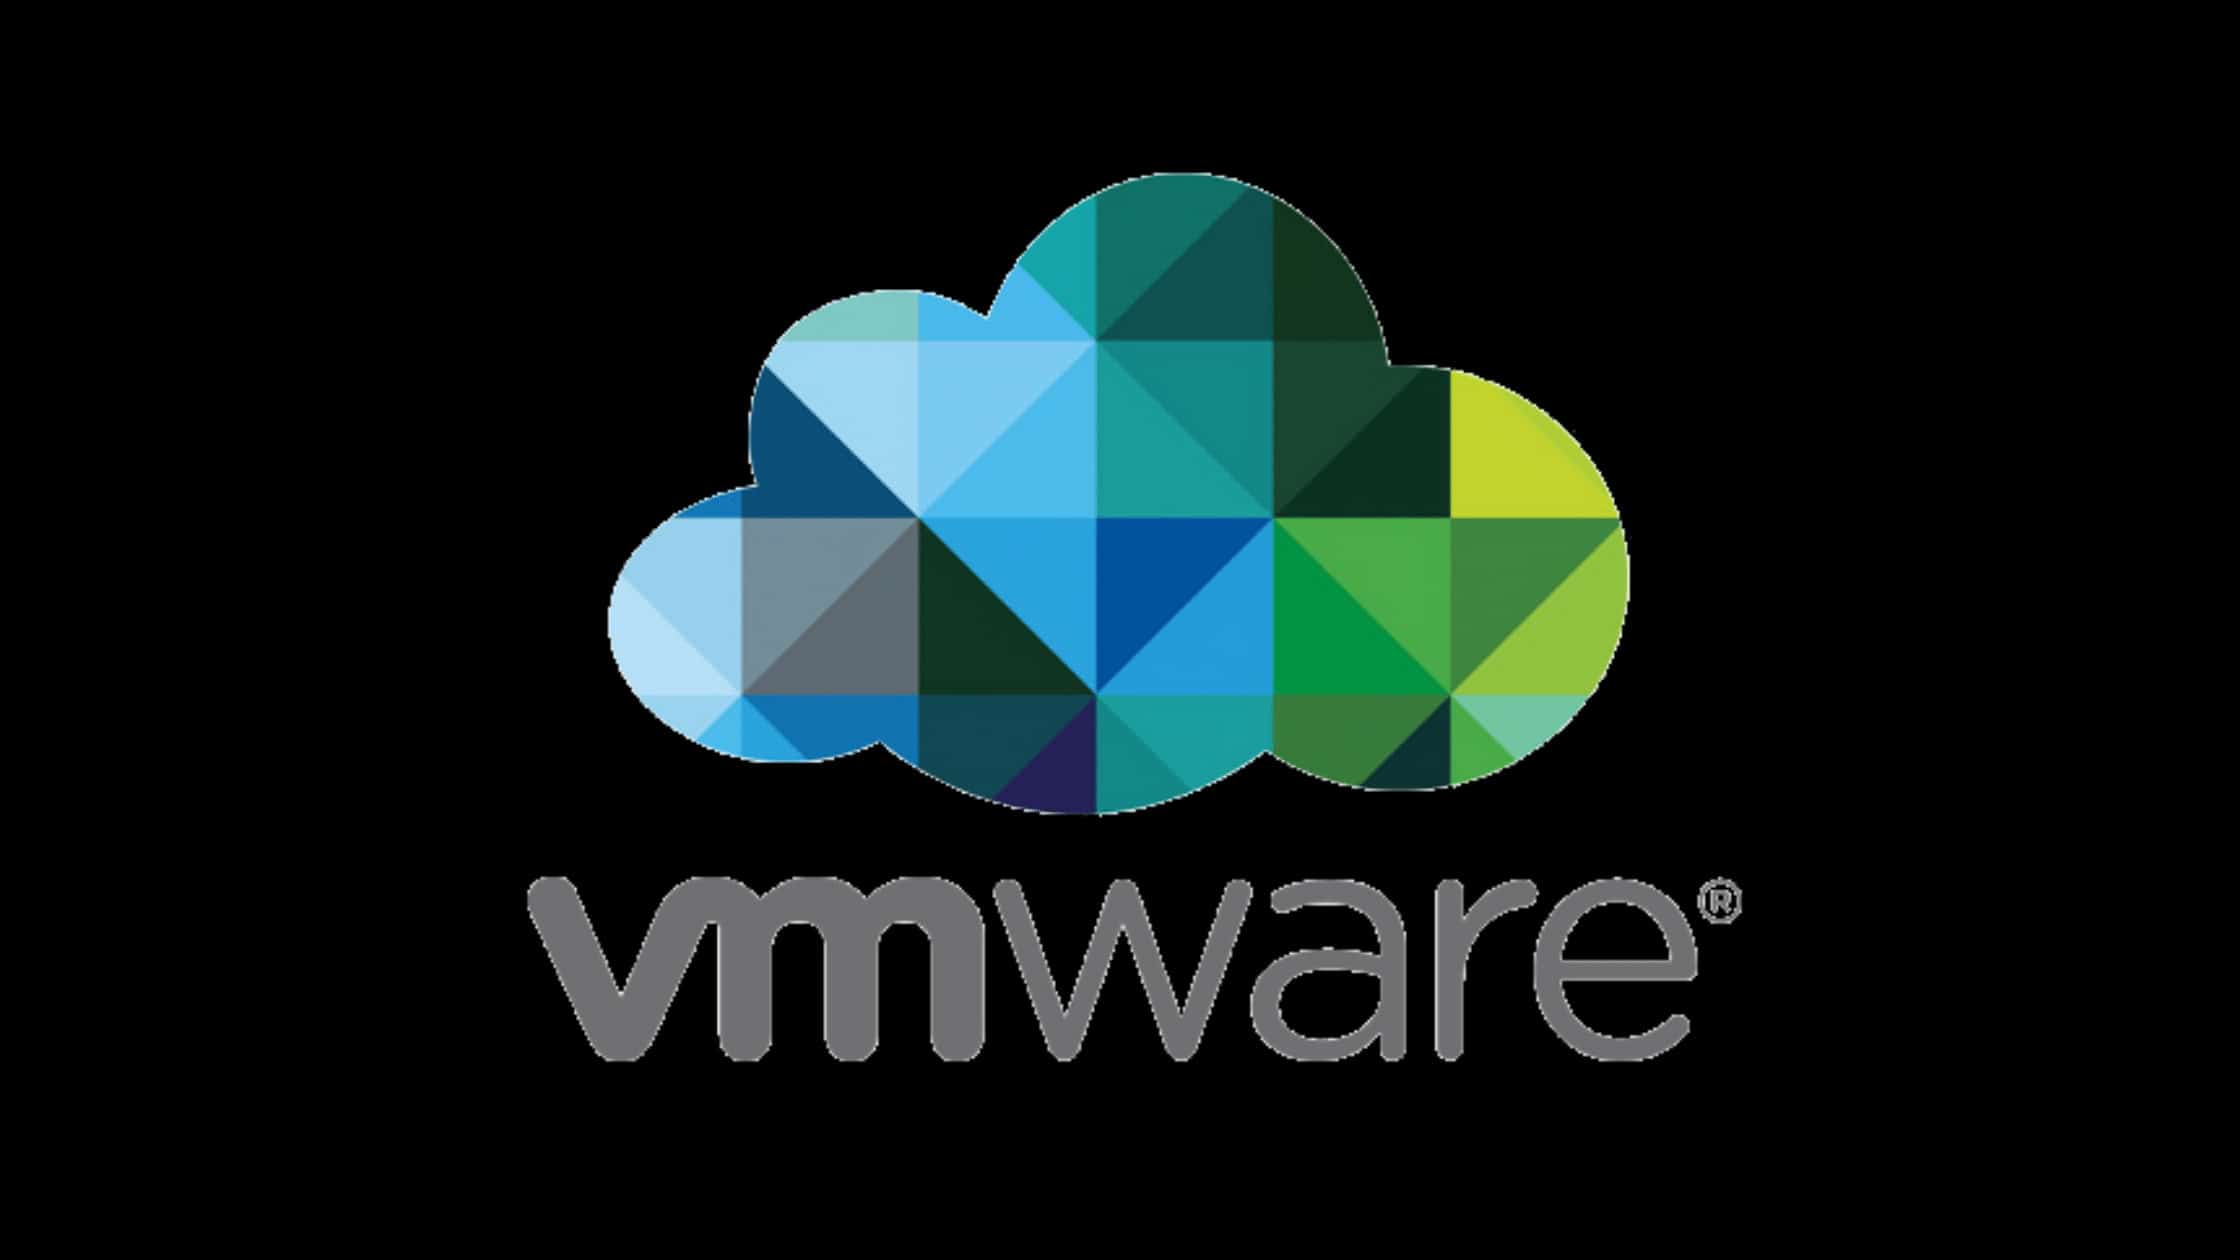 How To Fix Cve 2021 39144 A Critical Rce Vulnerability In Vmware Cloud Foundation